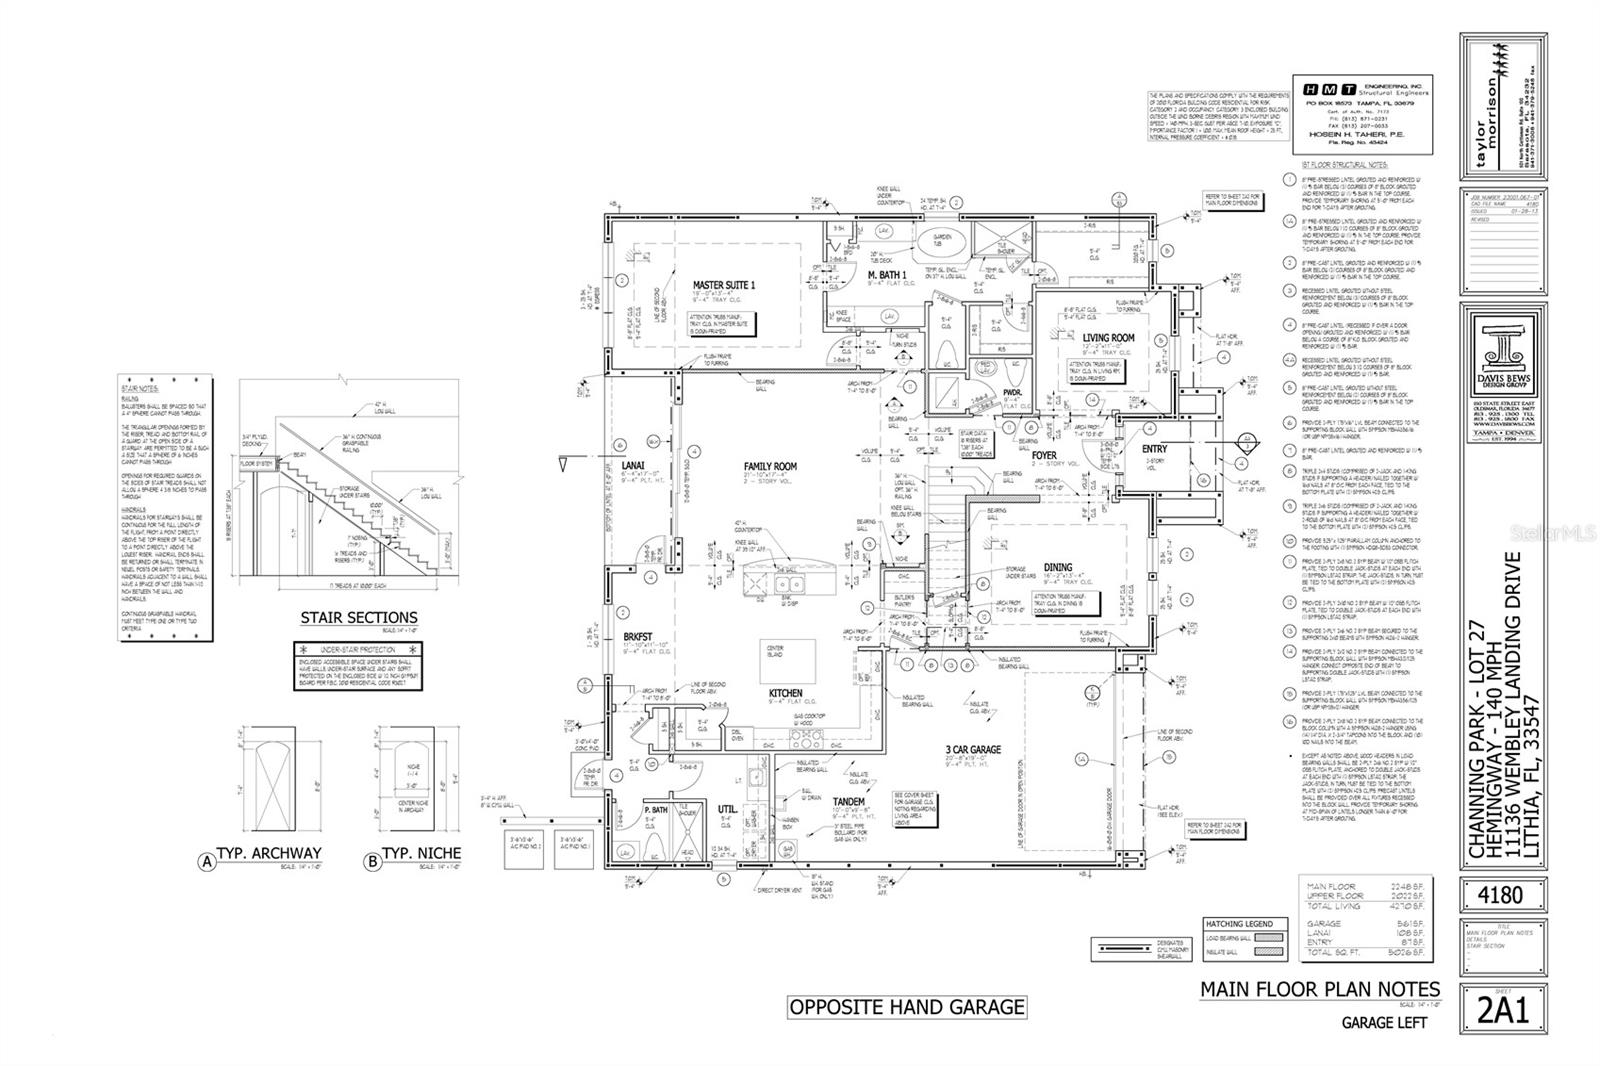 Main Floor Plan (Reversed floor plan)